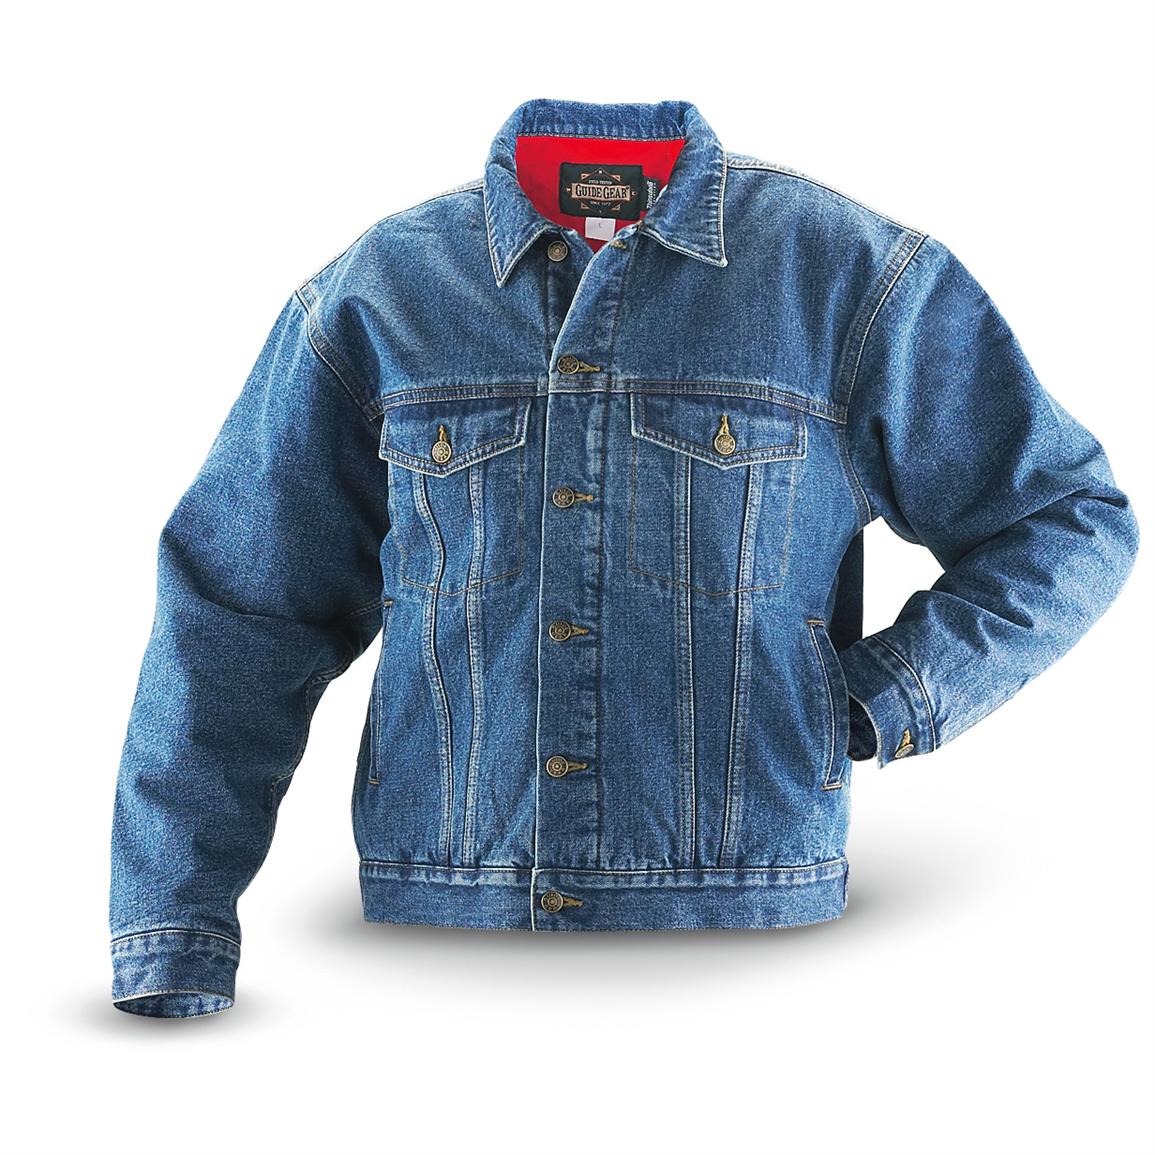 DayoSpeakS : Jean jackets; thats the latest fashion piece